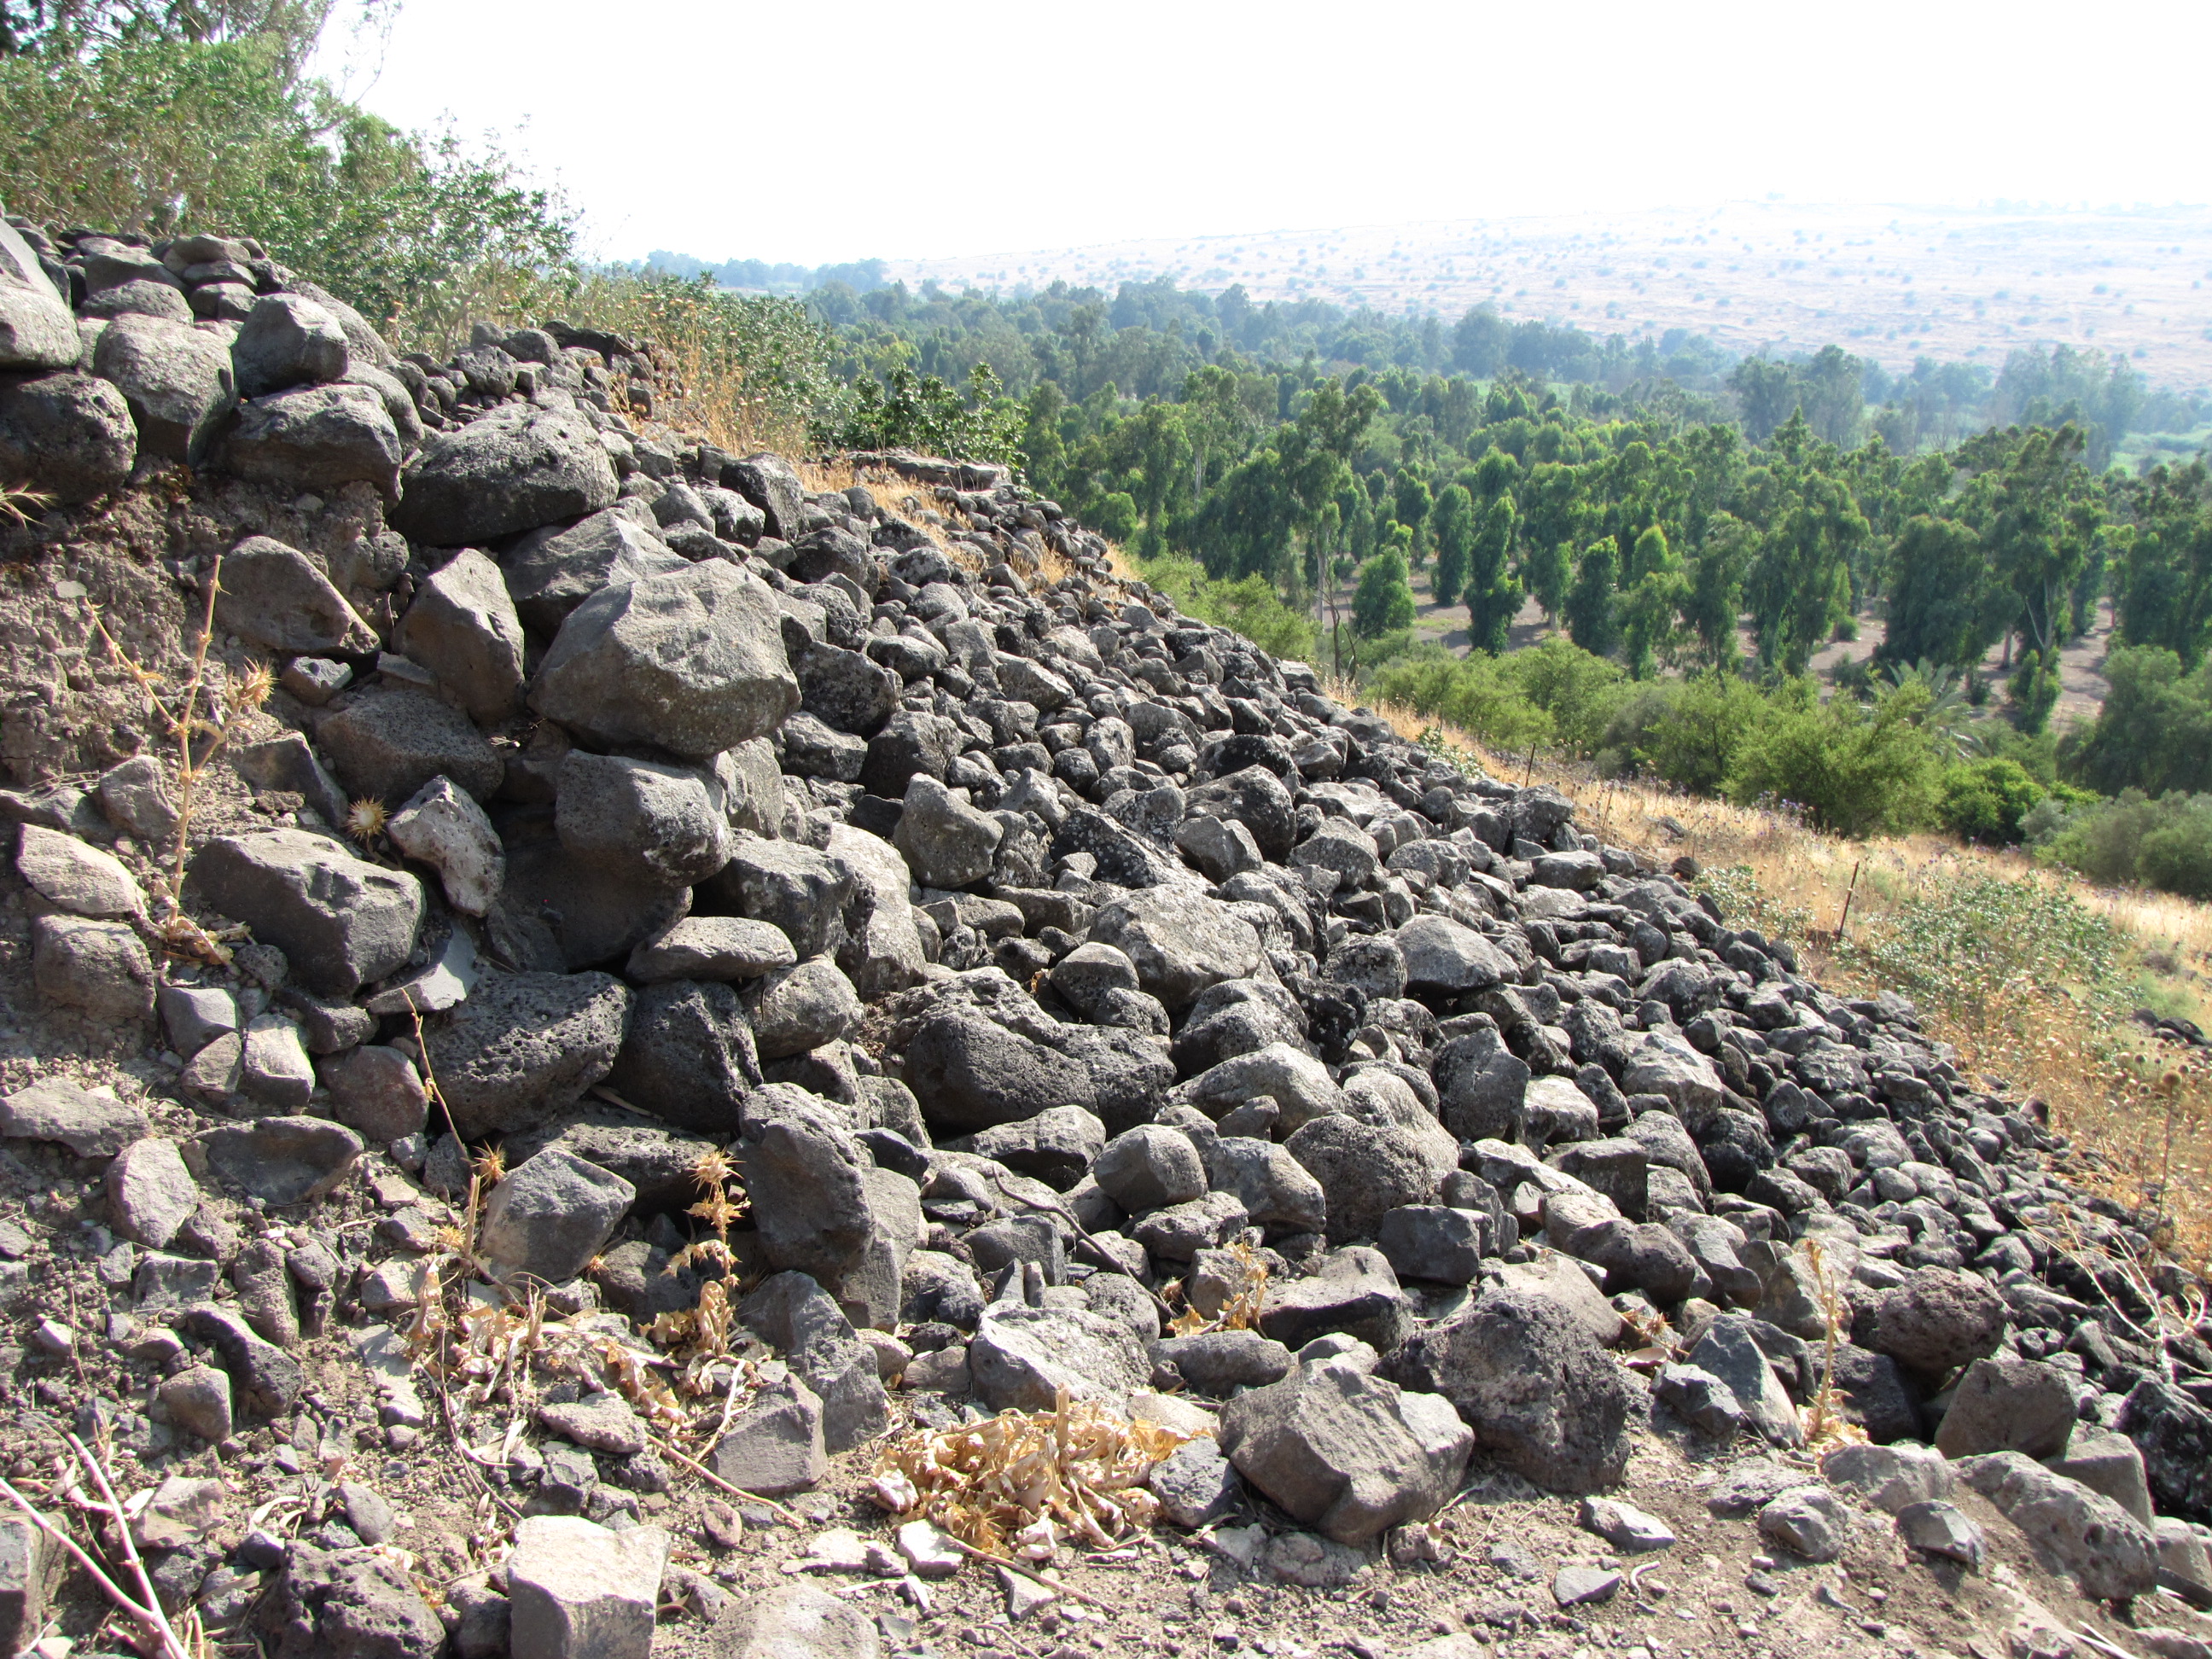 View looking toward the Sea of Galilee from Bethsaida, or OT Geshur